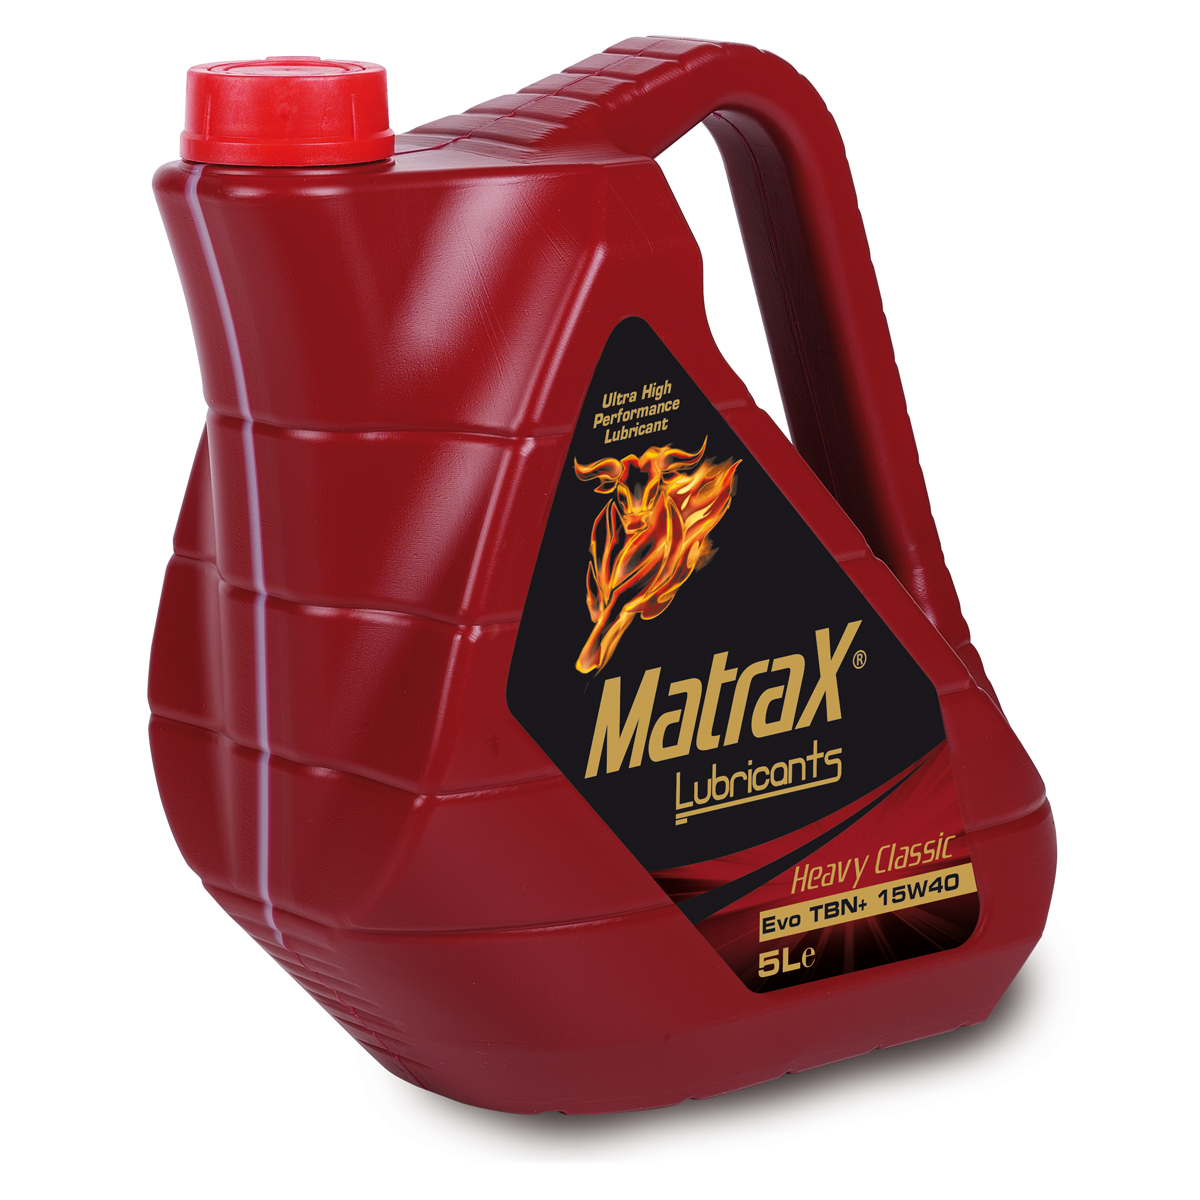 matrax-lubricants-heavy-classic-Evo-tbn-mas-15w40-5l